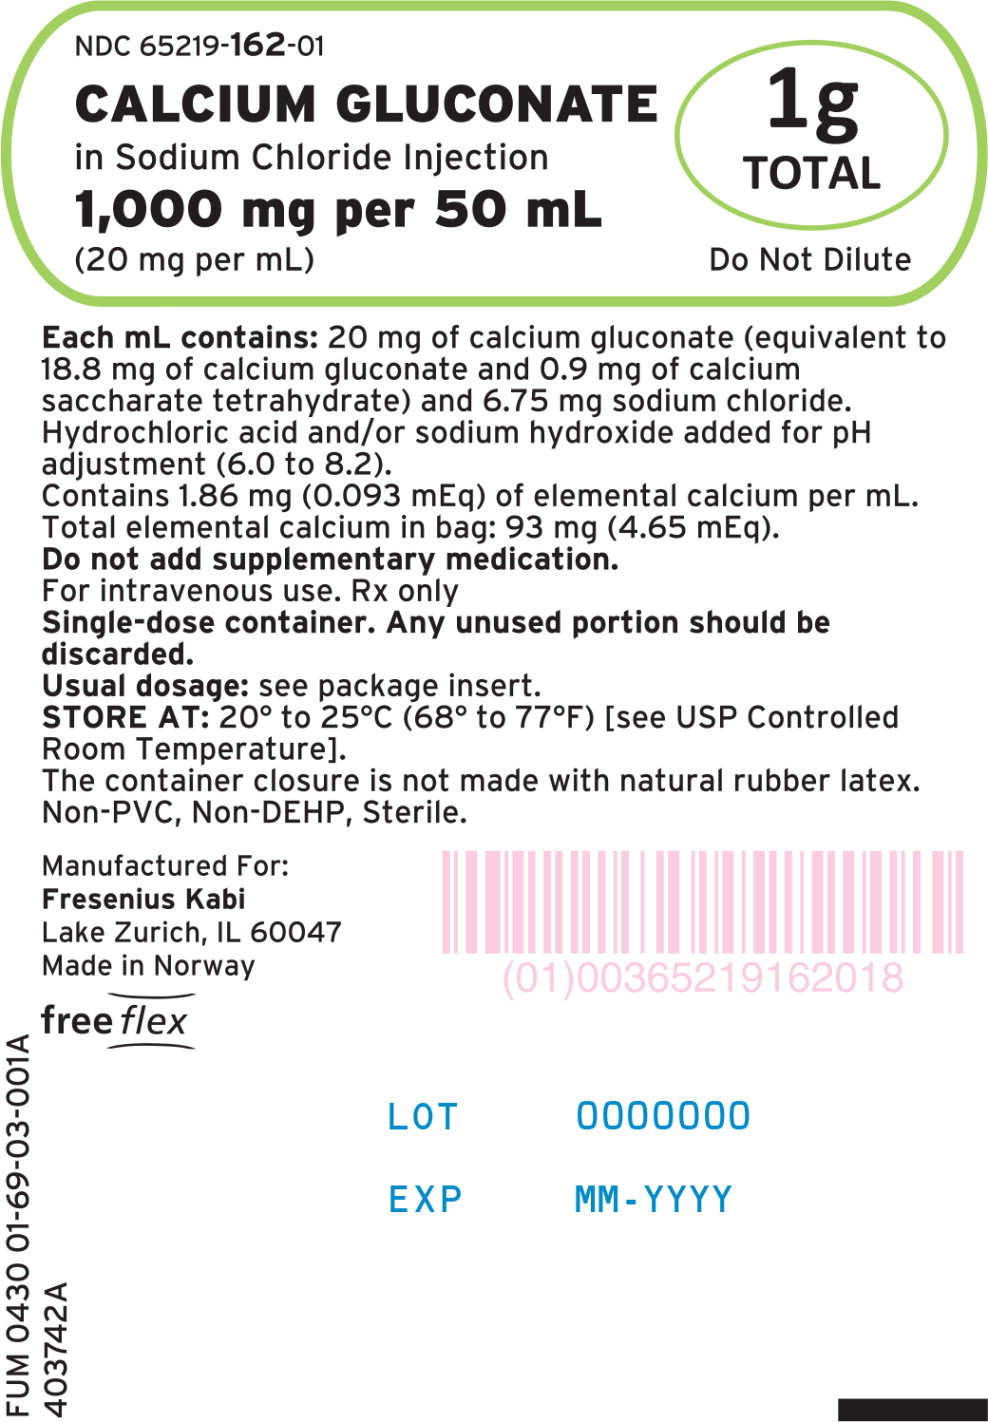 PACKAGE LABEL - PRINCIPAL DISPLAY – Calcium Gluconate 1 g Bag Label
